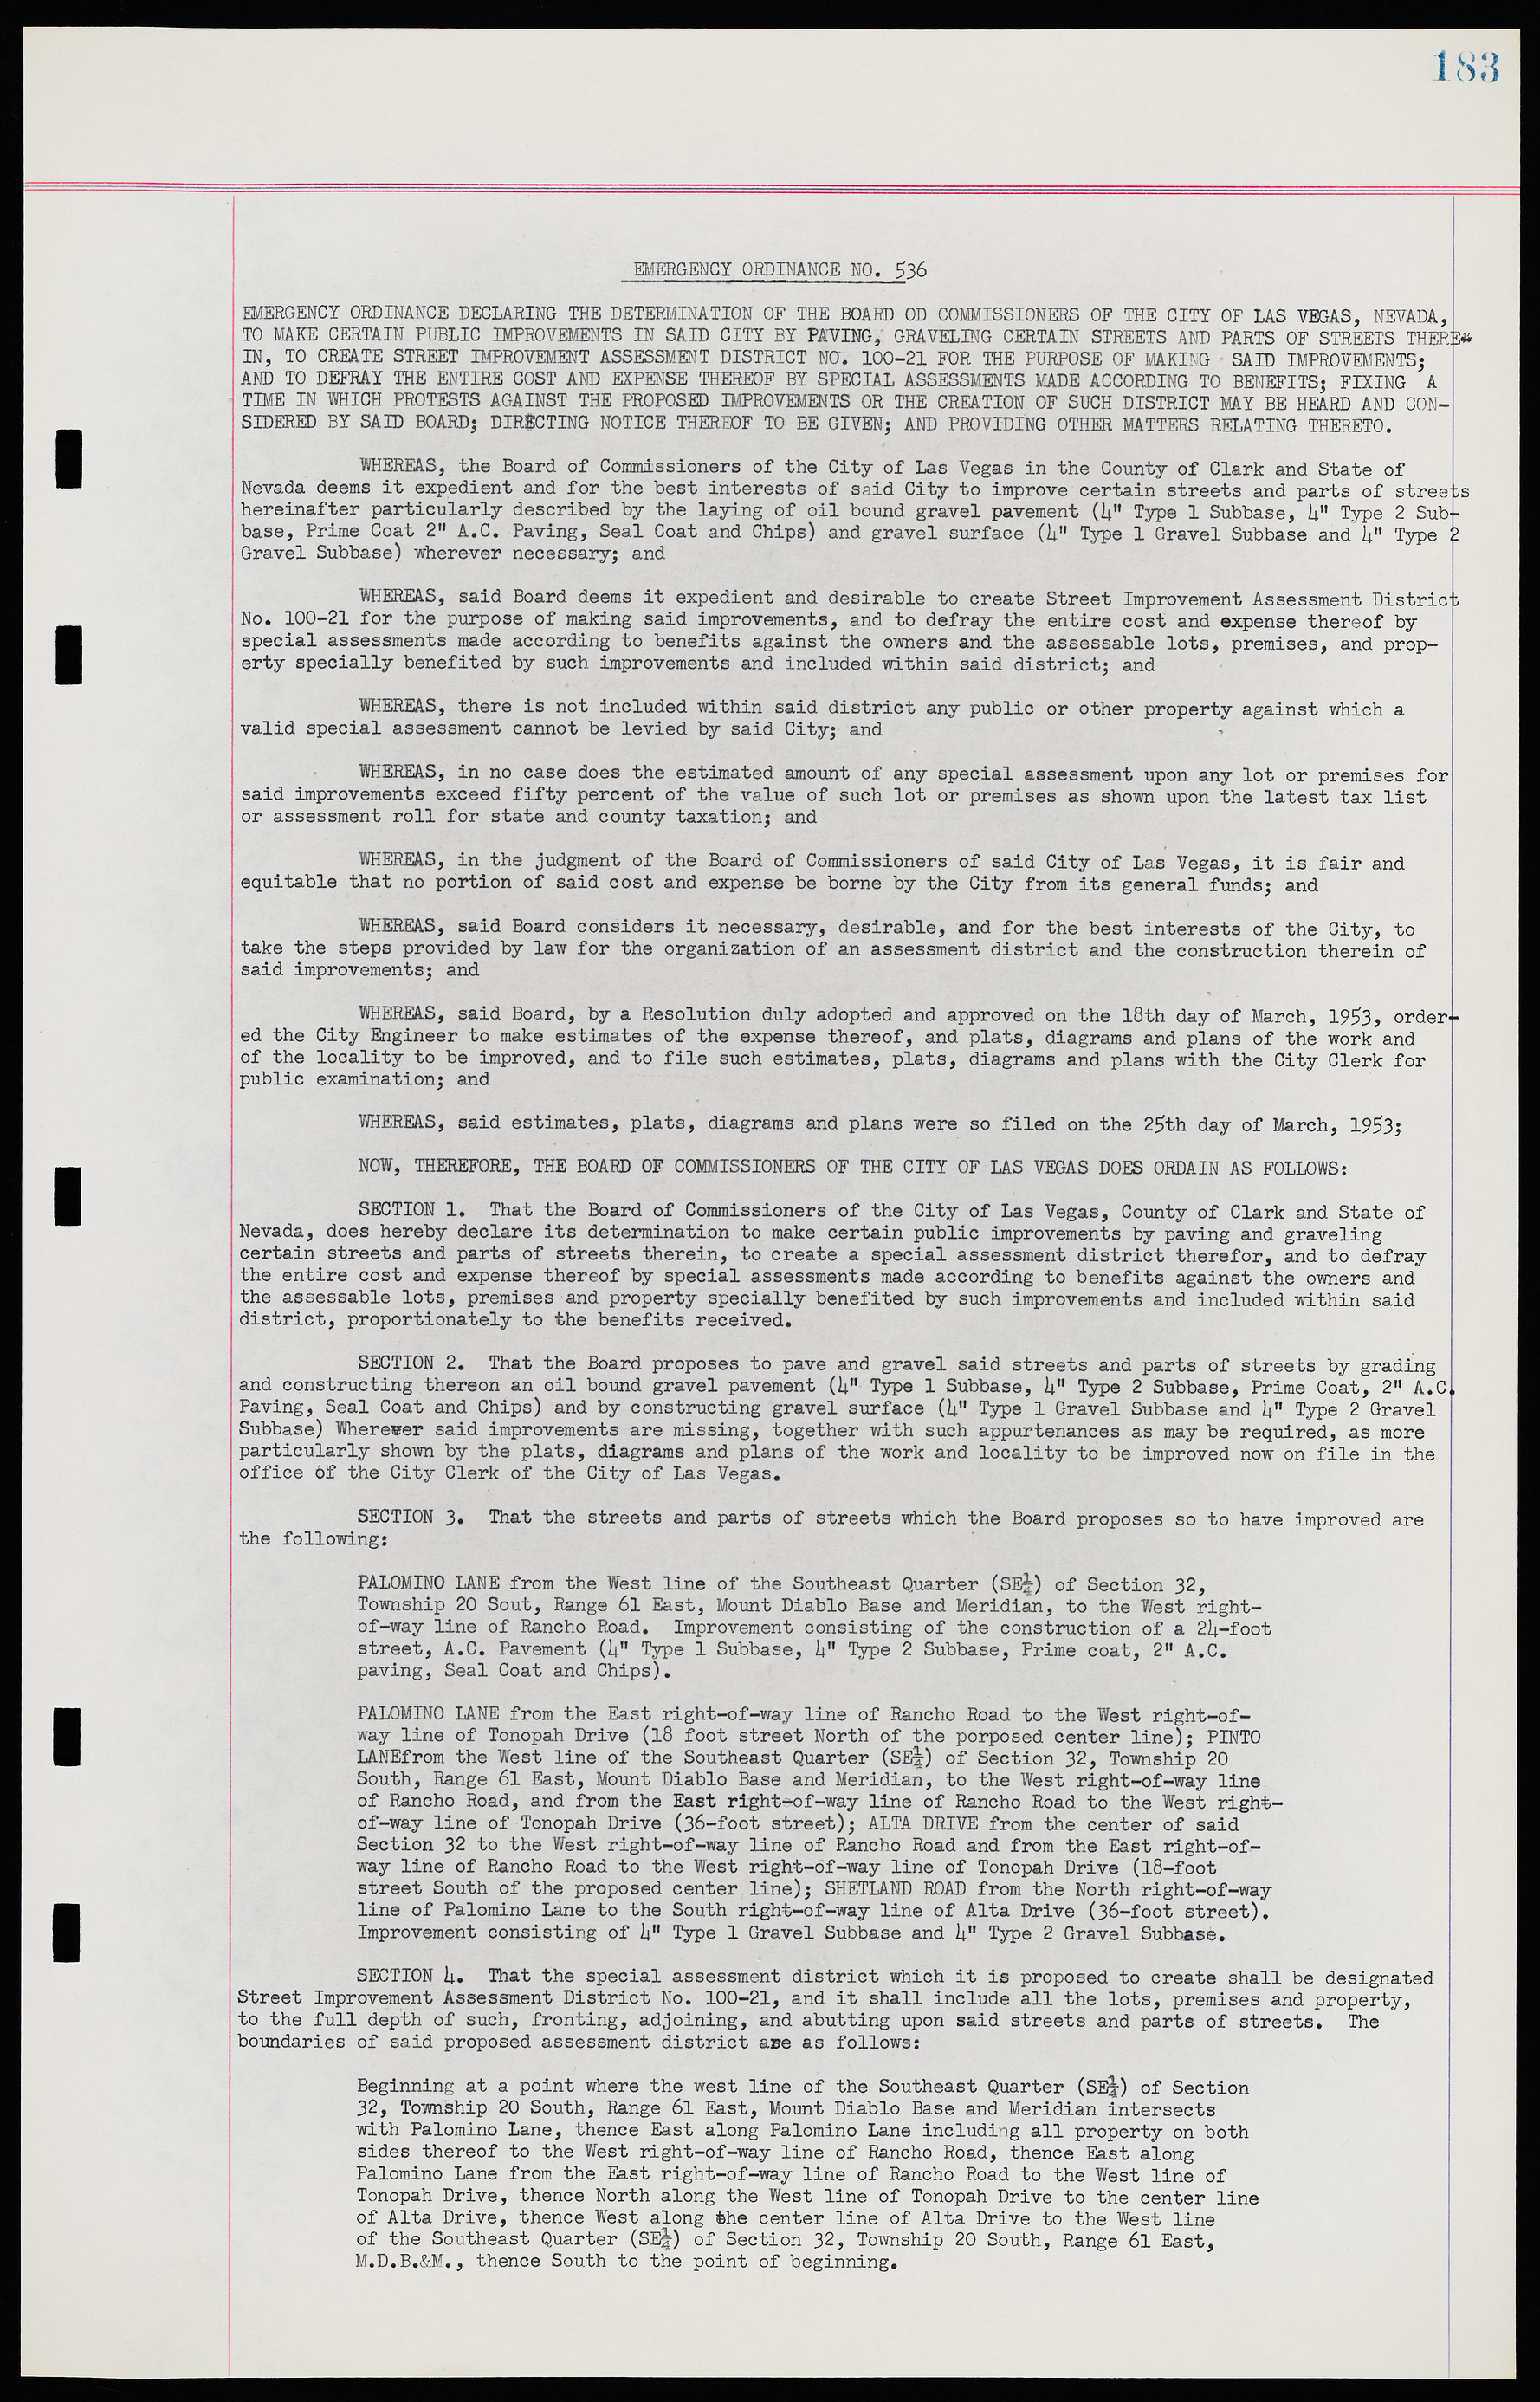 Las Vegas City Ordinances, November 13, 1950 to August 6, 1958, lvc000015-191